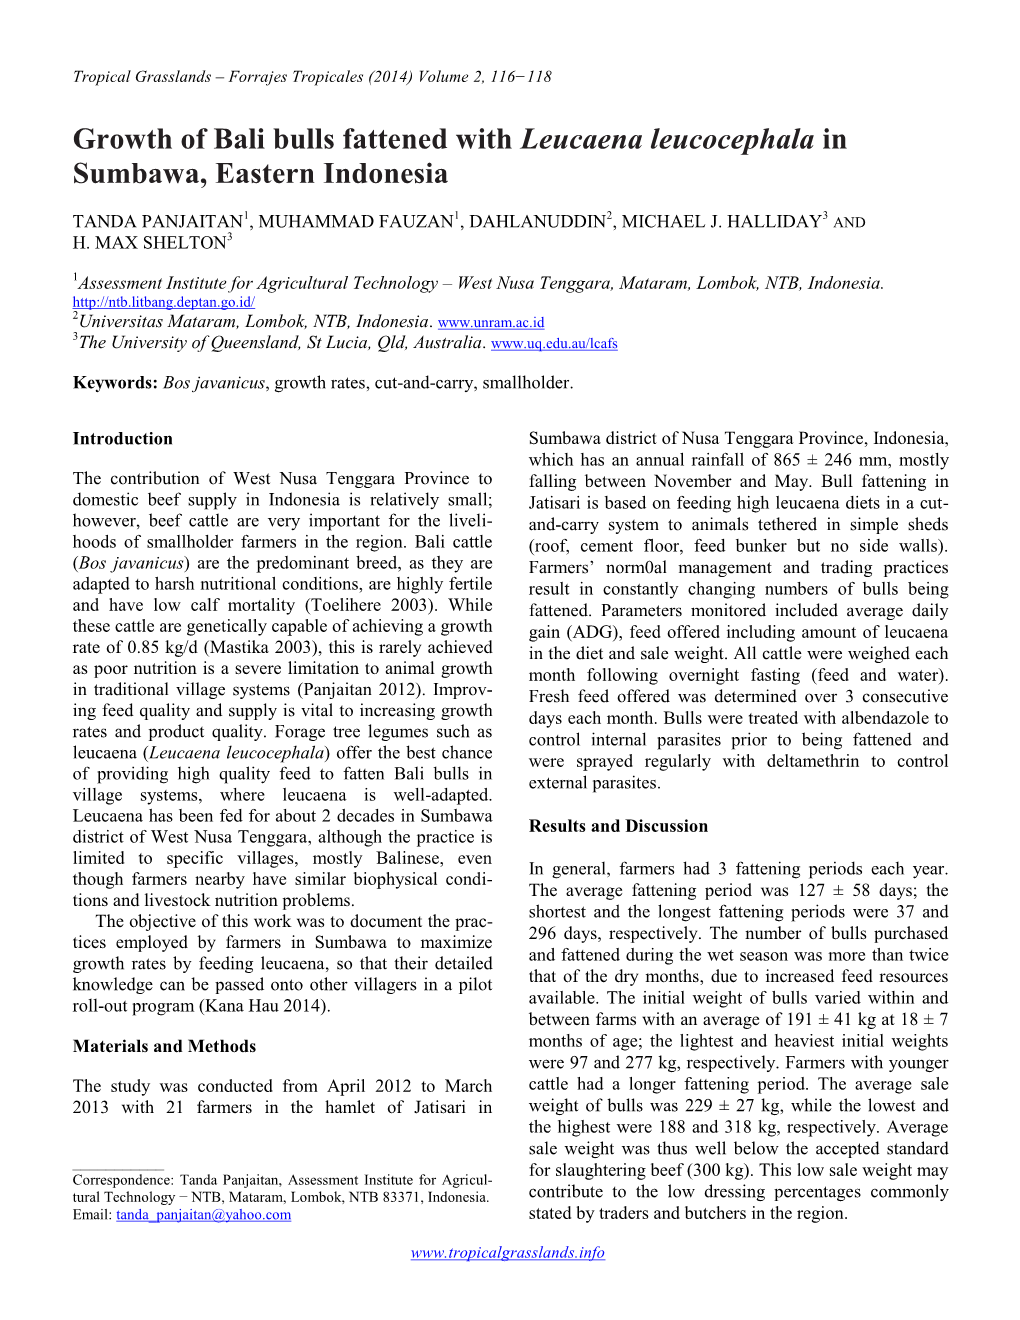 Growth of Bali Bulls Fattened with Leucaena Leucocephala in Sumbawa, Eastern Indonesia